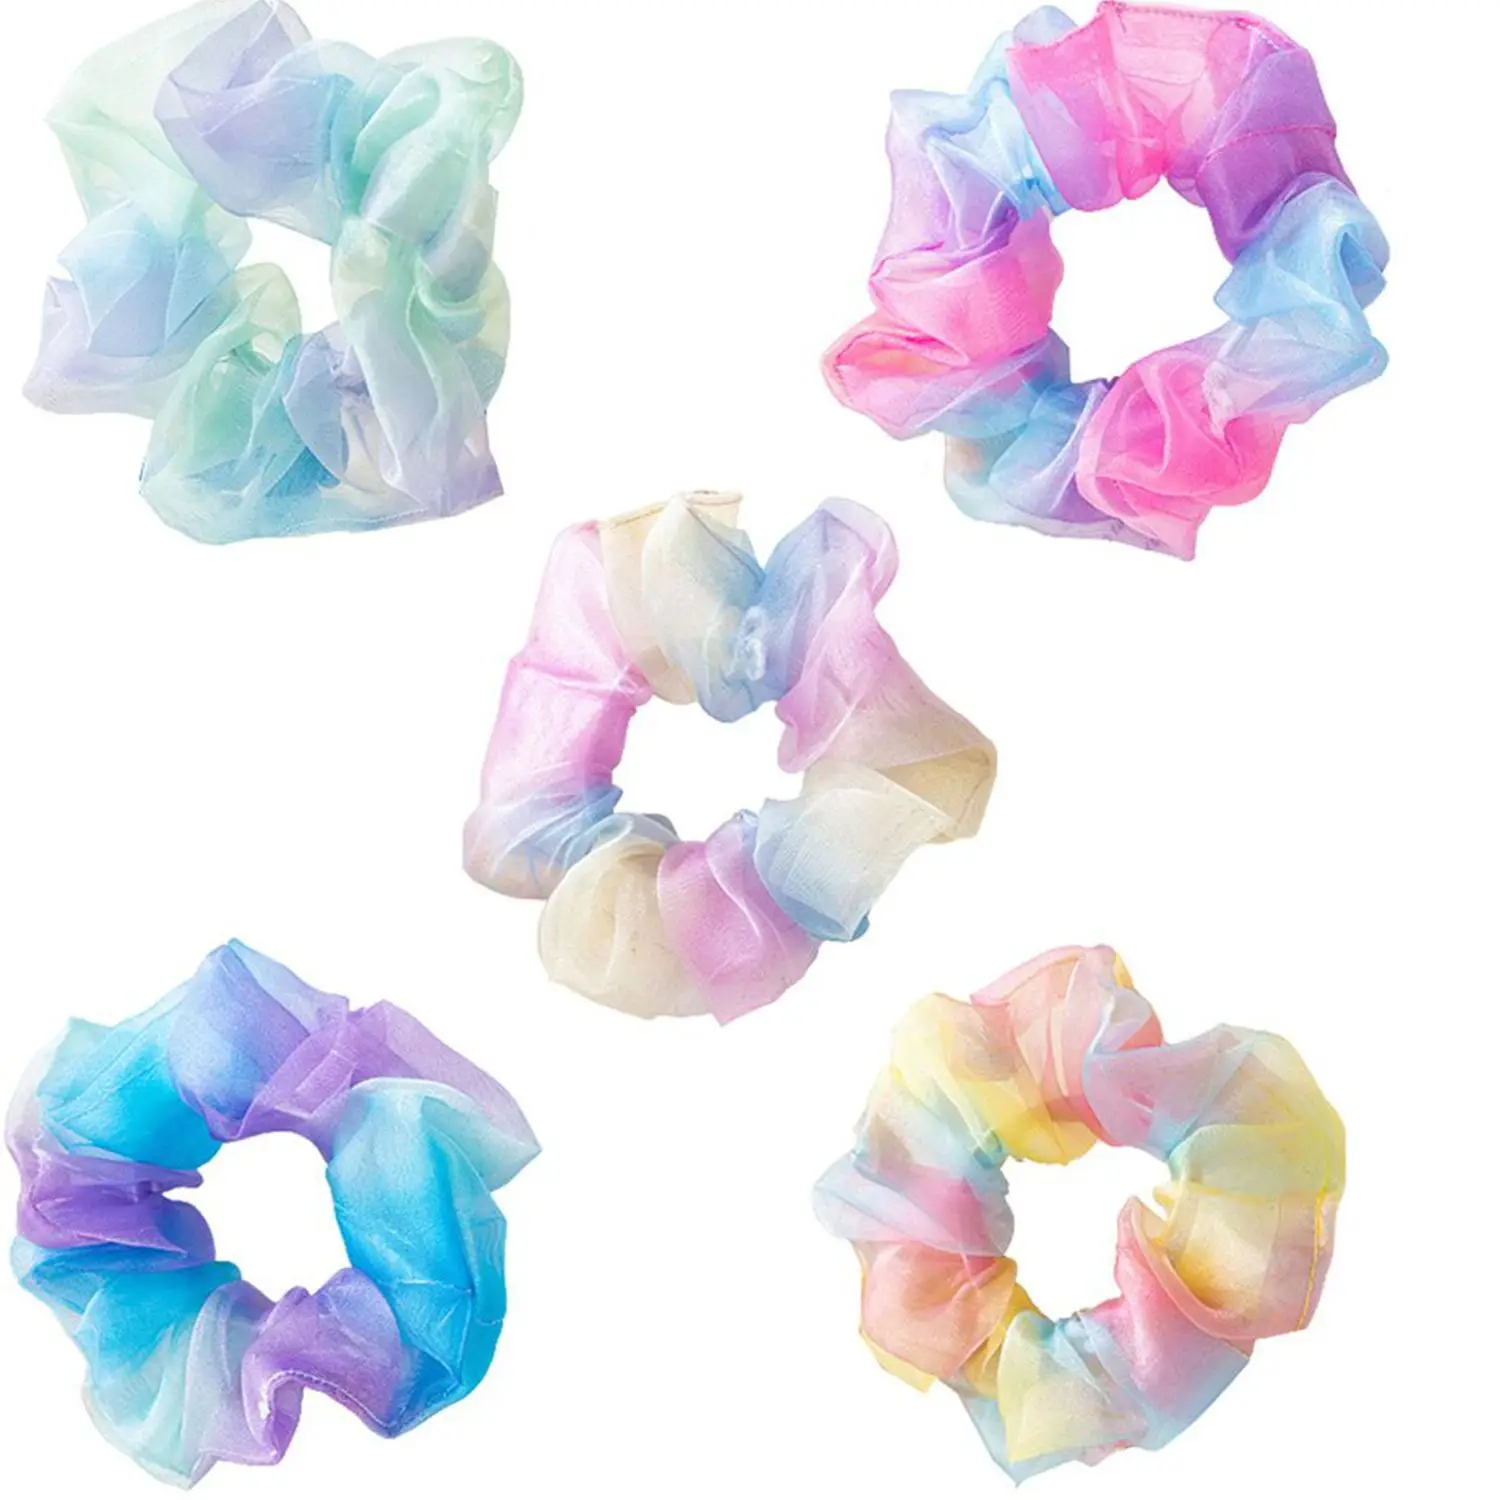 

Elastic Ponytail Holders Sweet Girls Multicolor Tie-Dyed Scrunchies Rubber Band Hair Ties